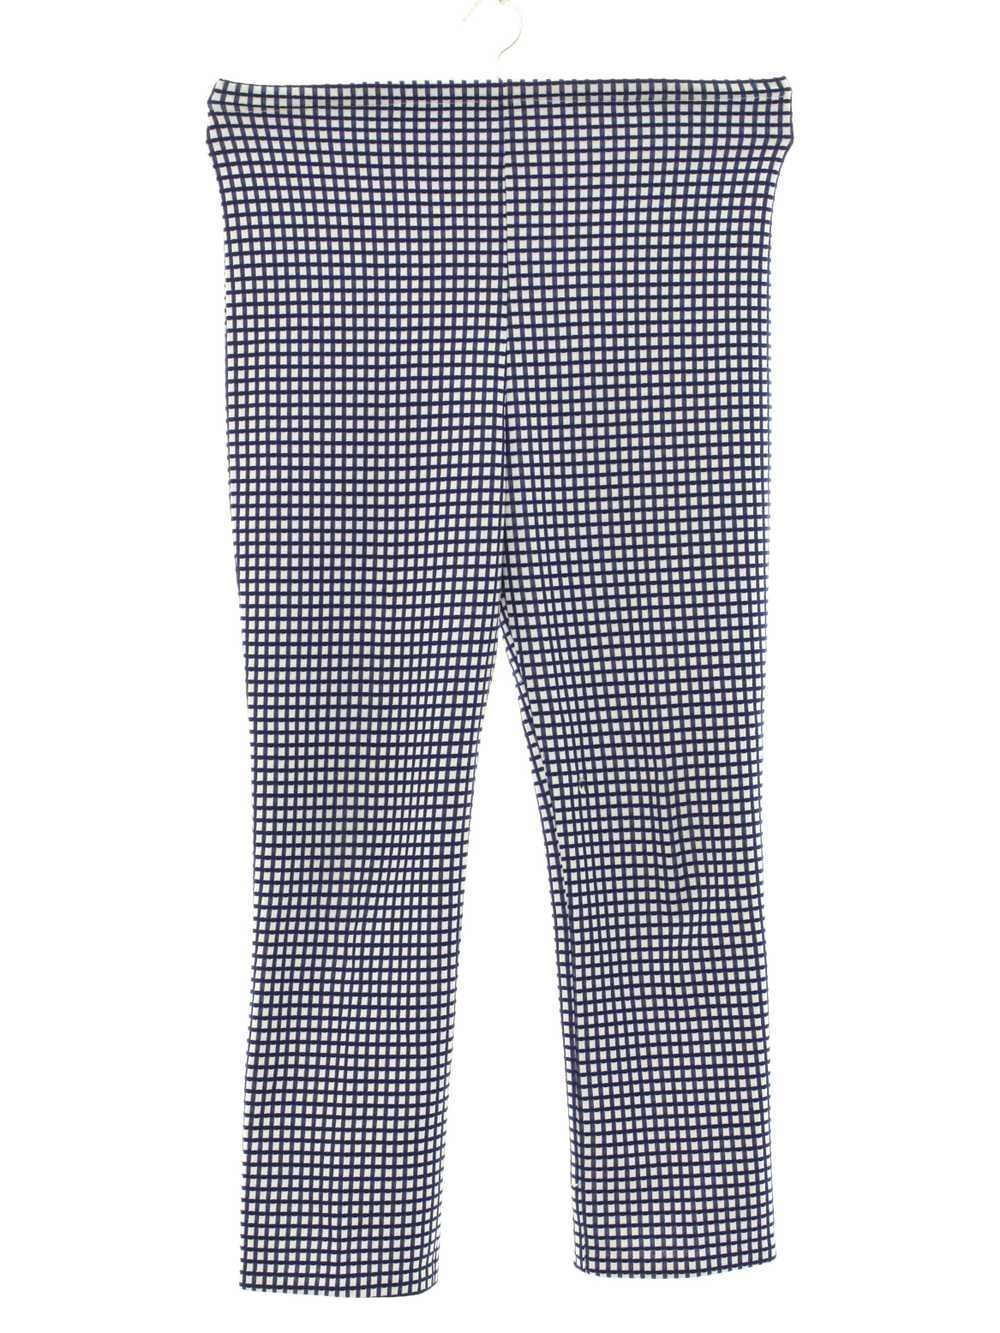 1970's Womens Plaid Knit Leisure Style Pants - image 1